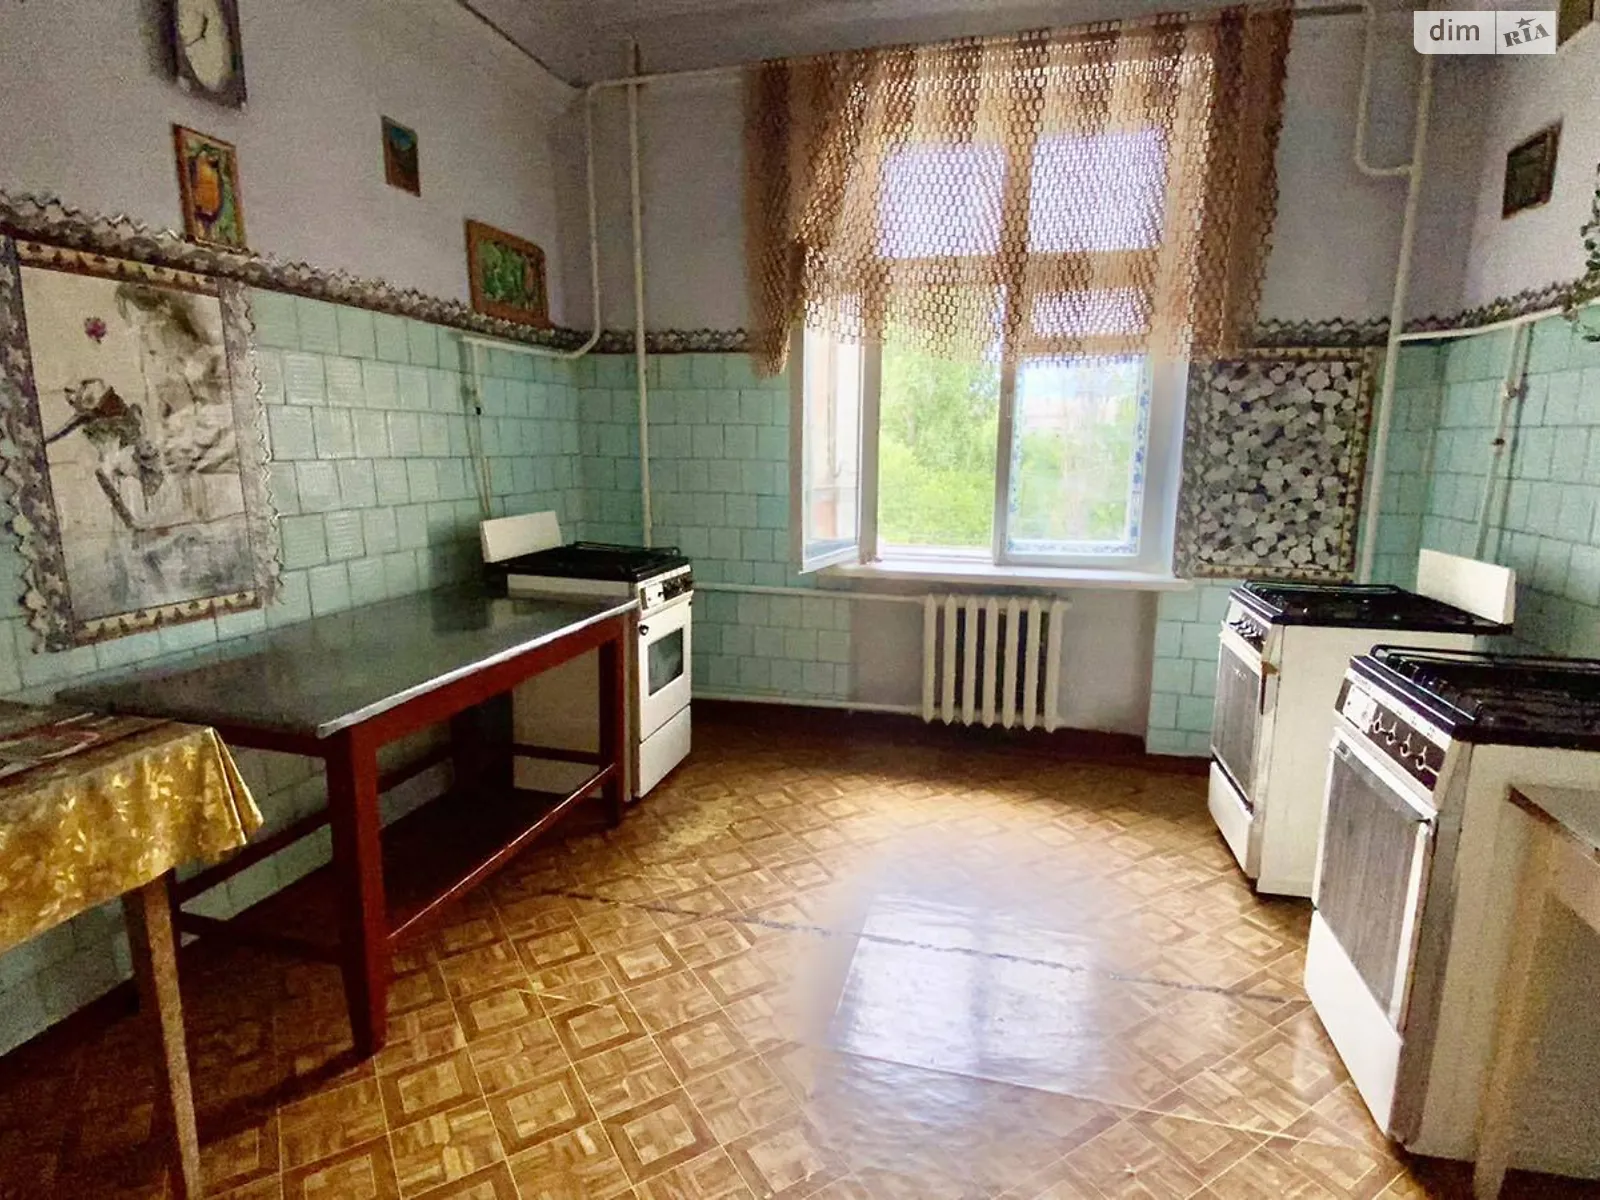 Продается комната 24 кв. м в Николаеве - фото 3